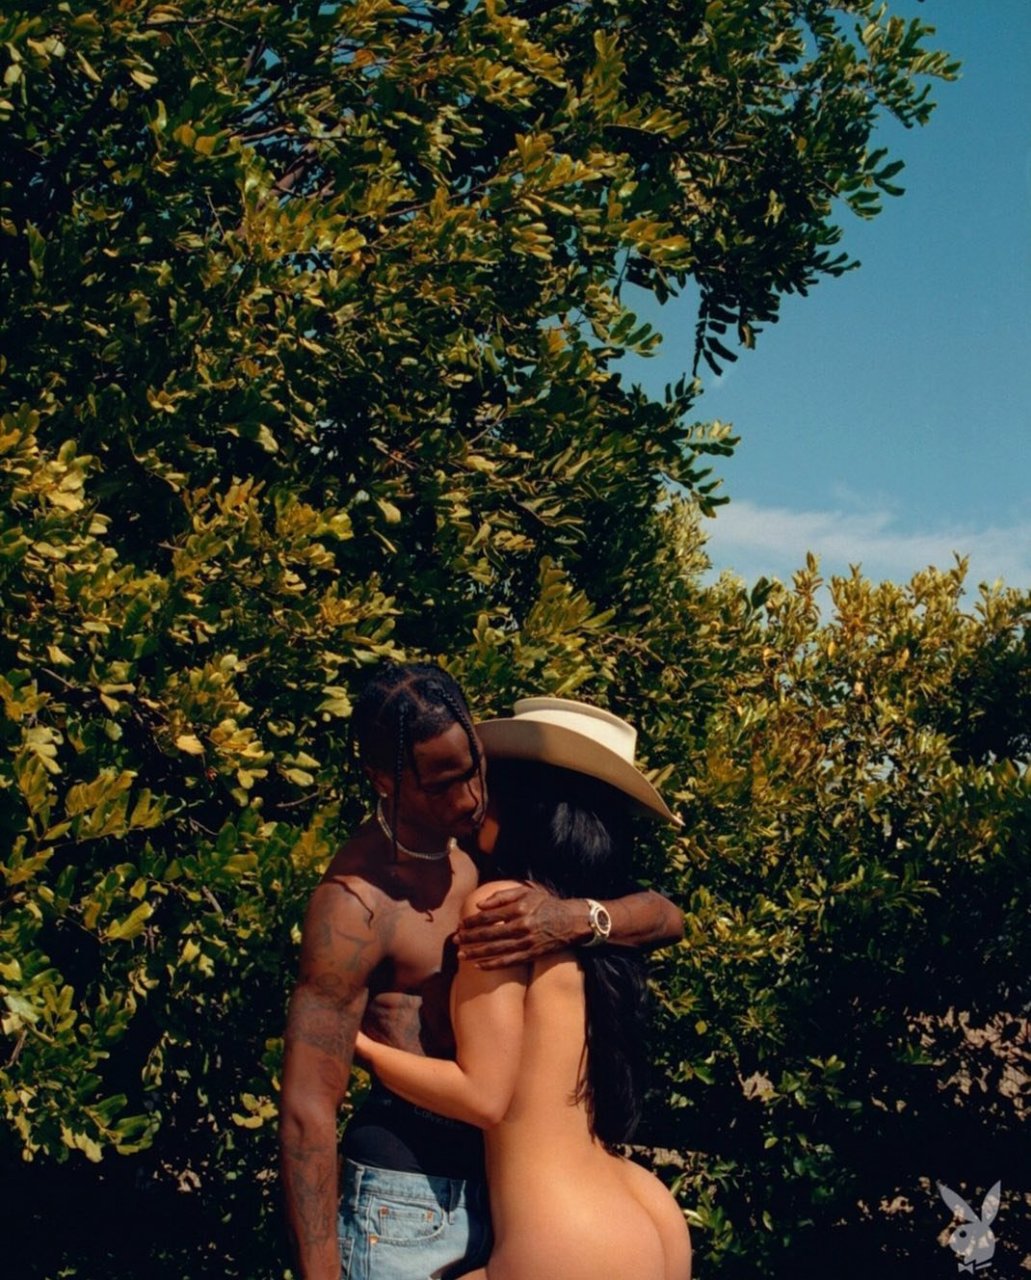 Kylie Jenner Nude & Sexy (21 Photos)